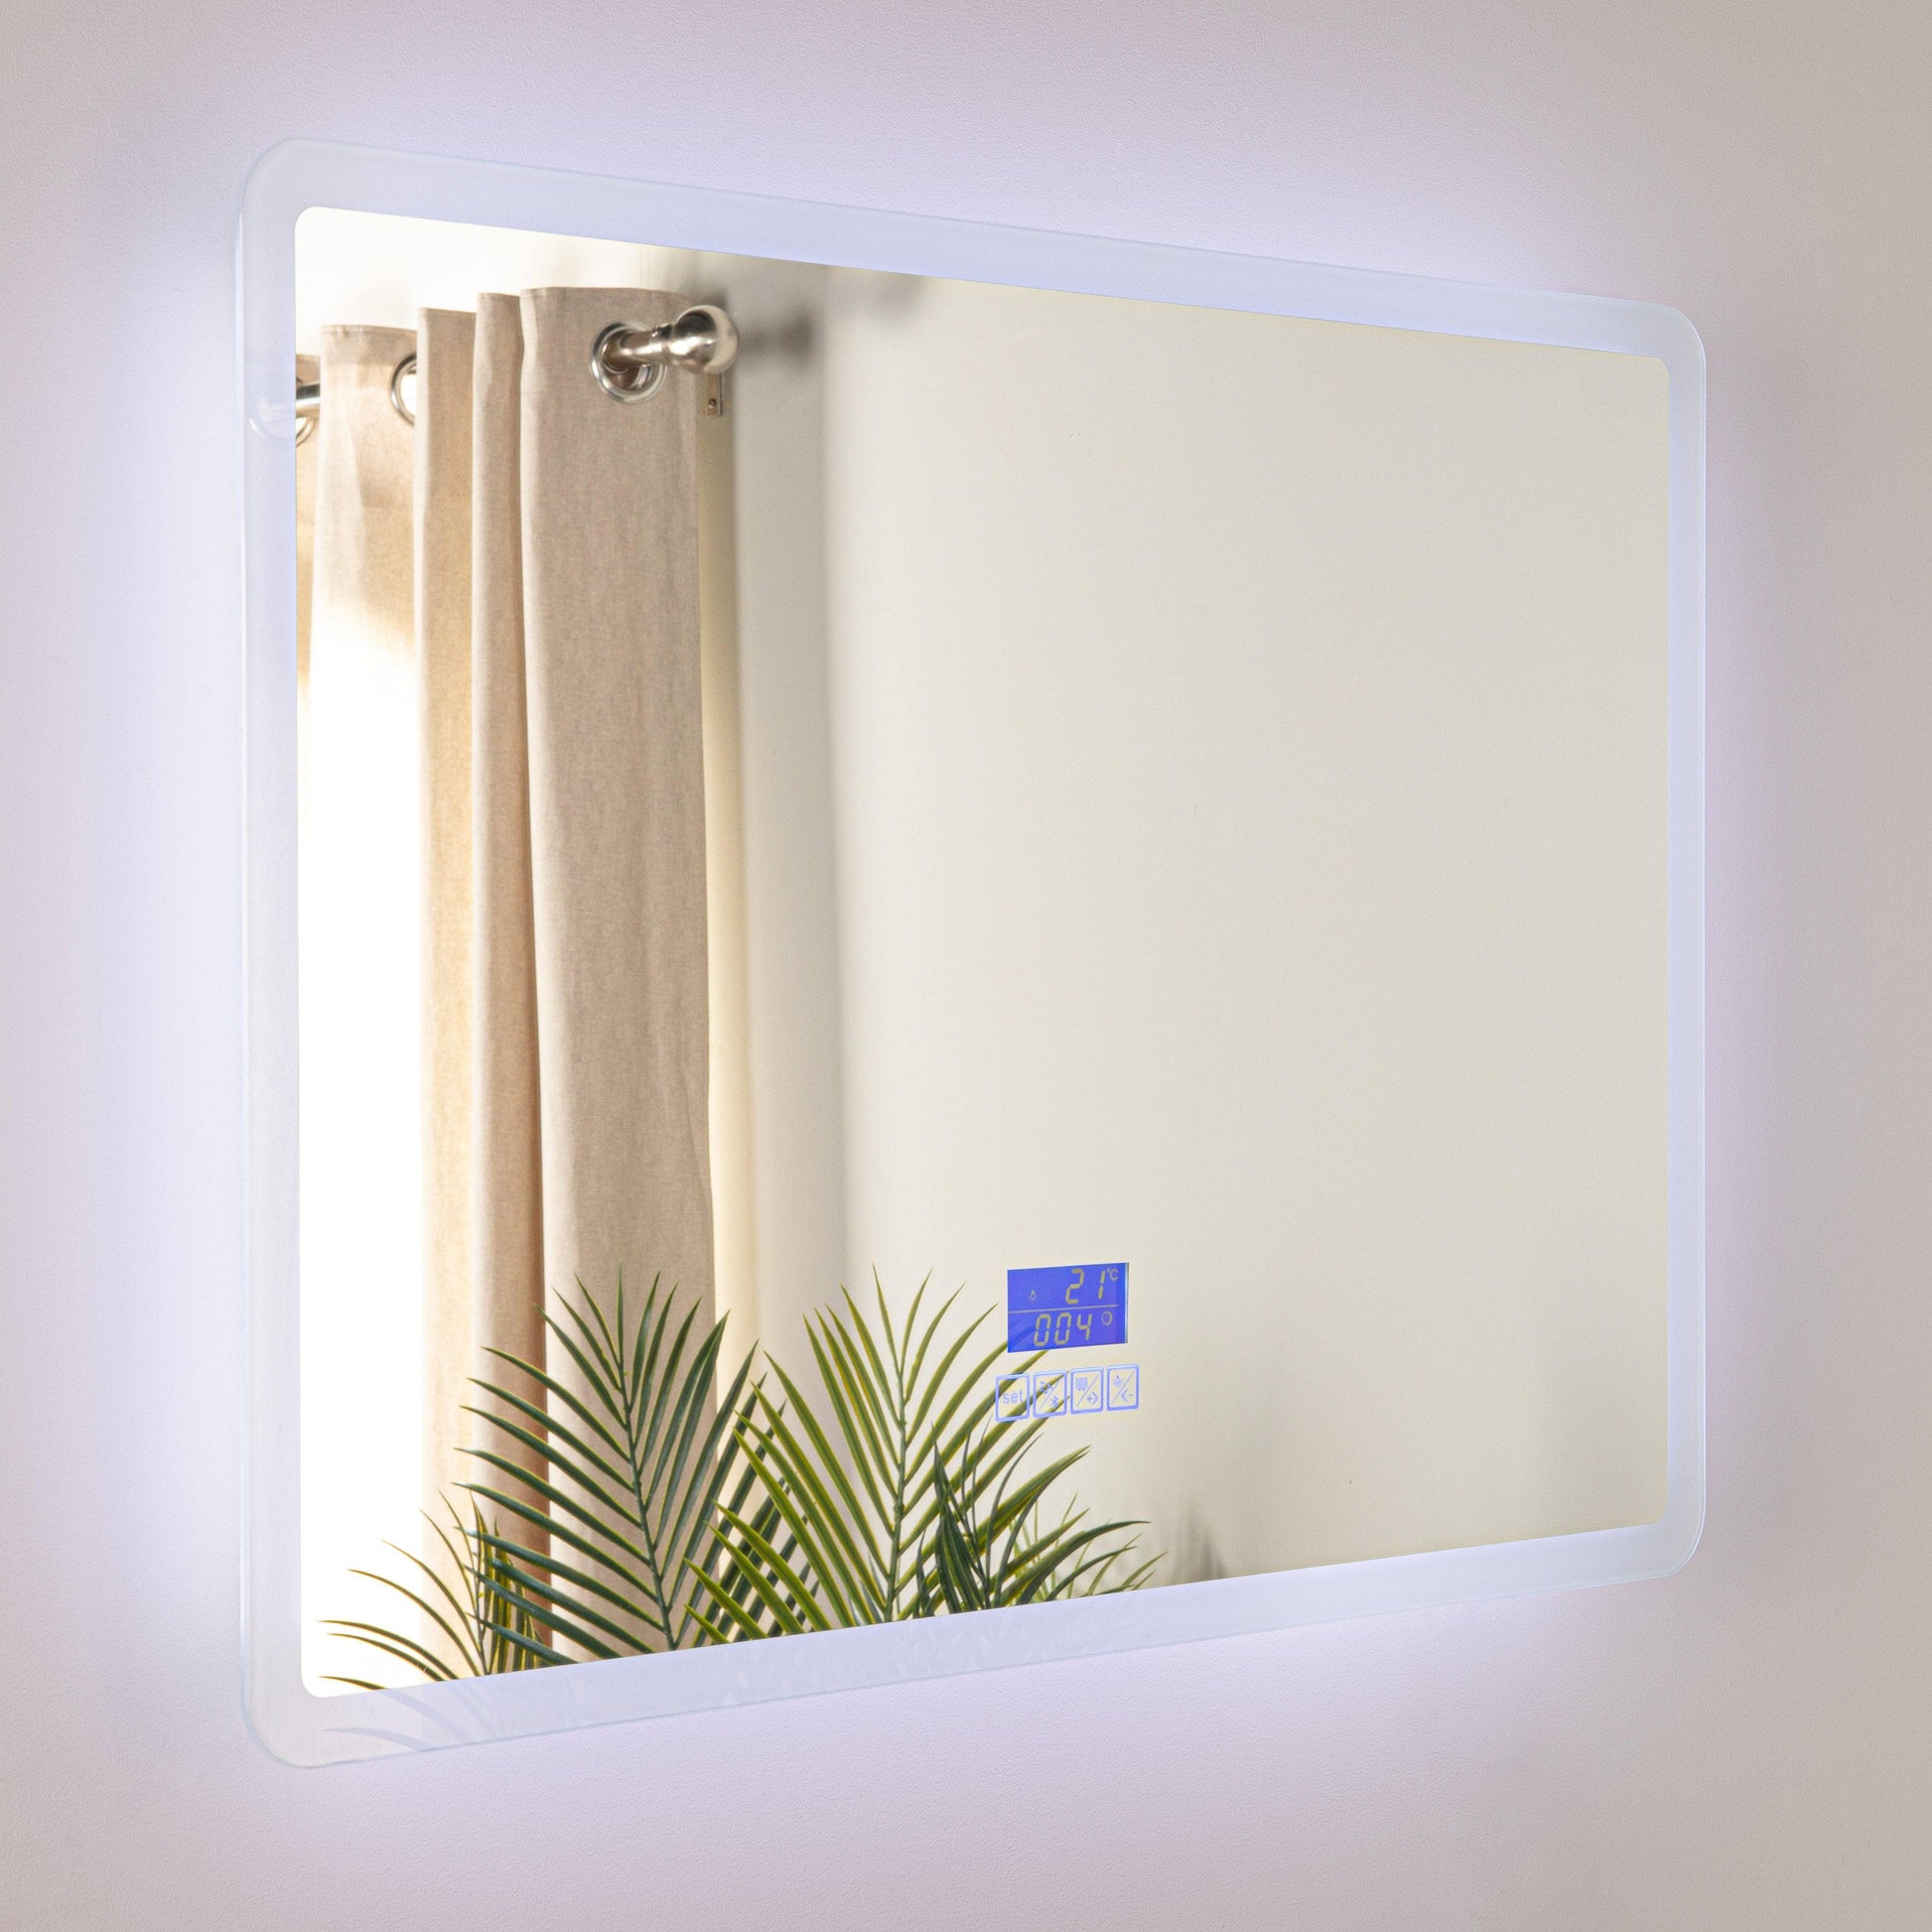 Mirrors  -  Euro Mirror Bluetooth Rectangle Landscape 80cm x 60cm  -  50155669